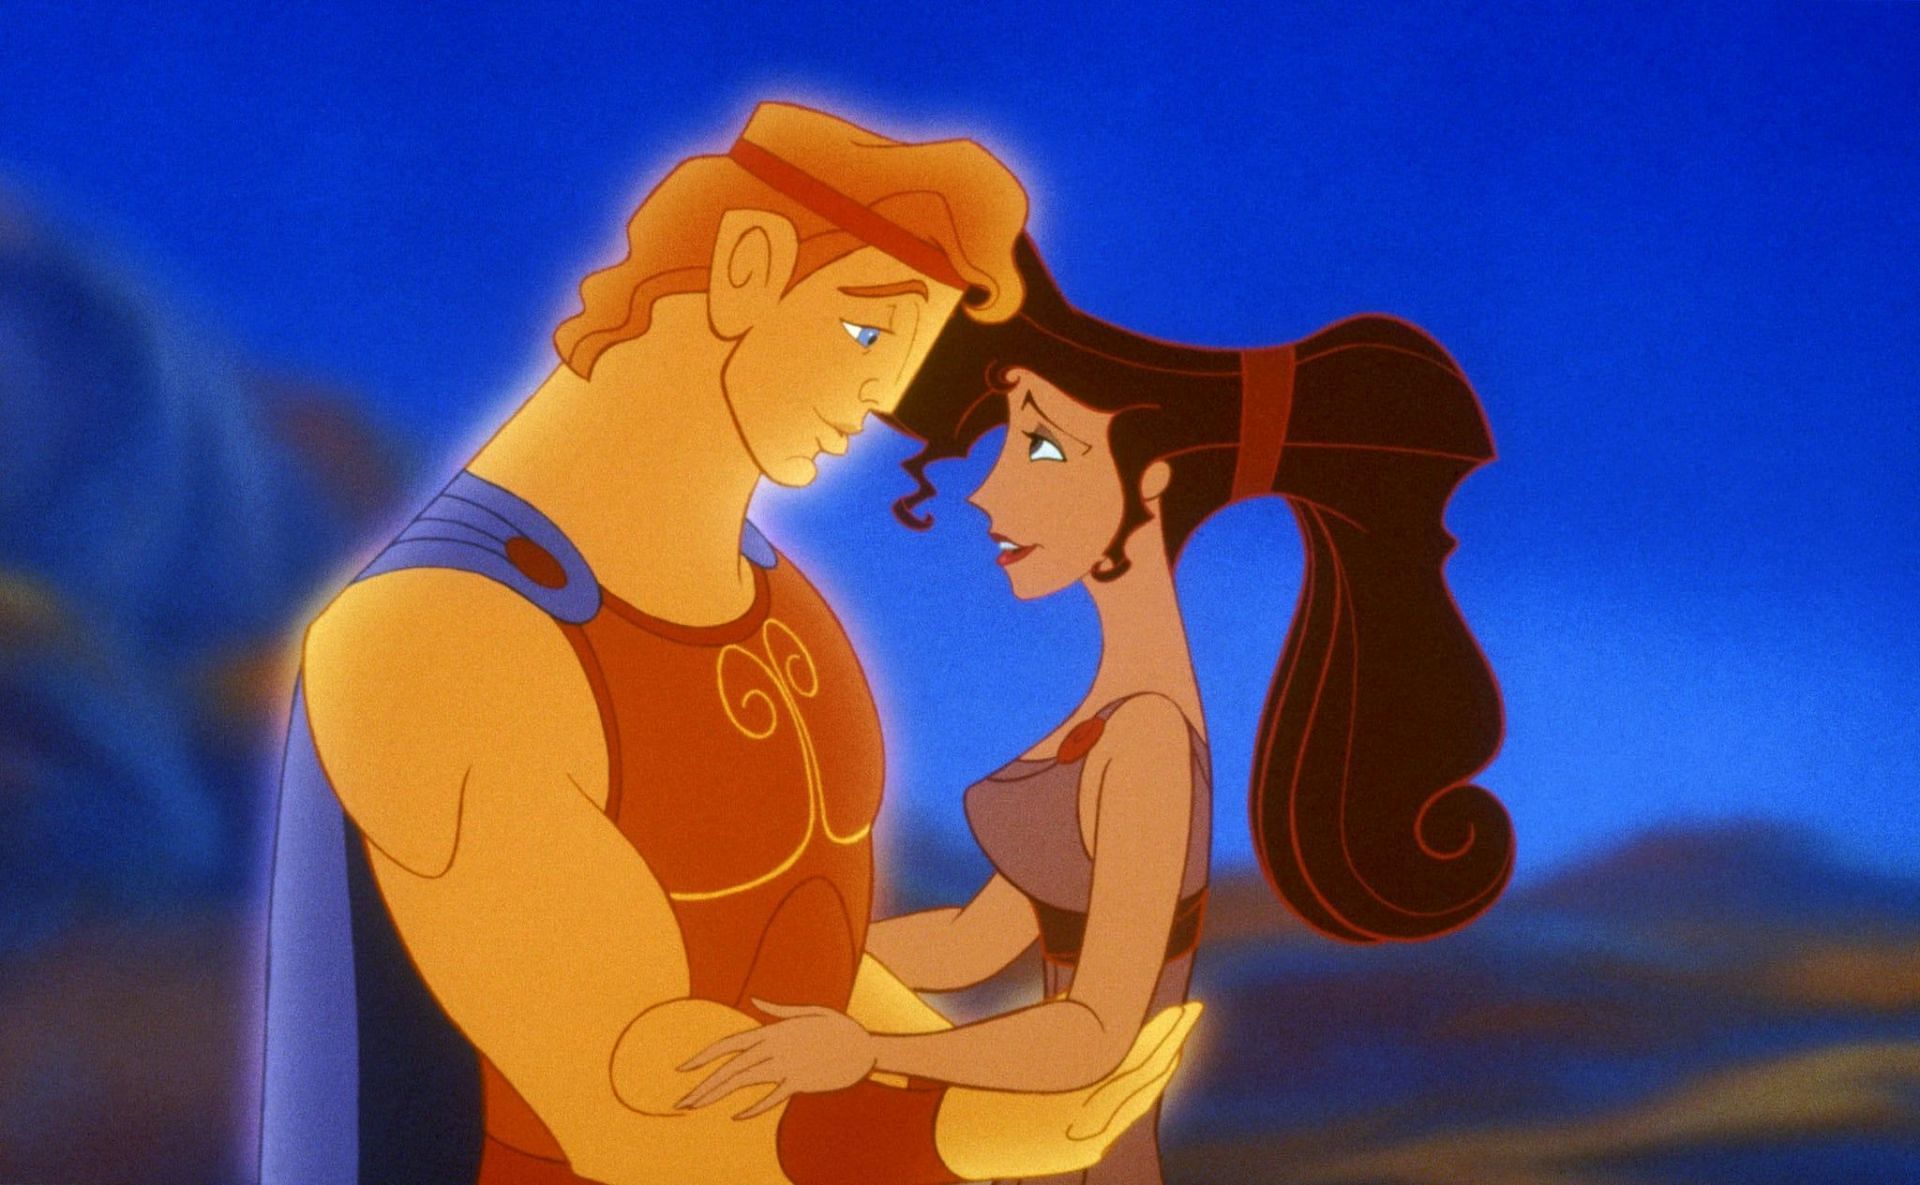 Hercules and Meg in the Disney classic (Image via POPSUGAR)